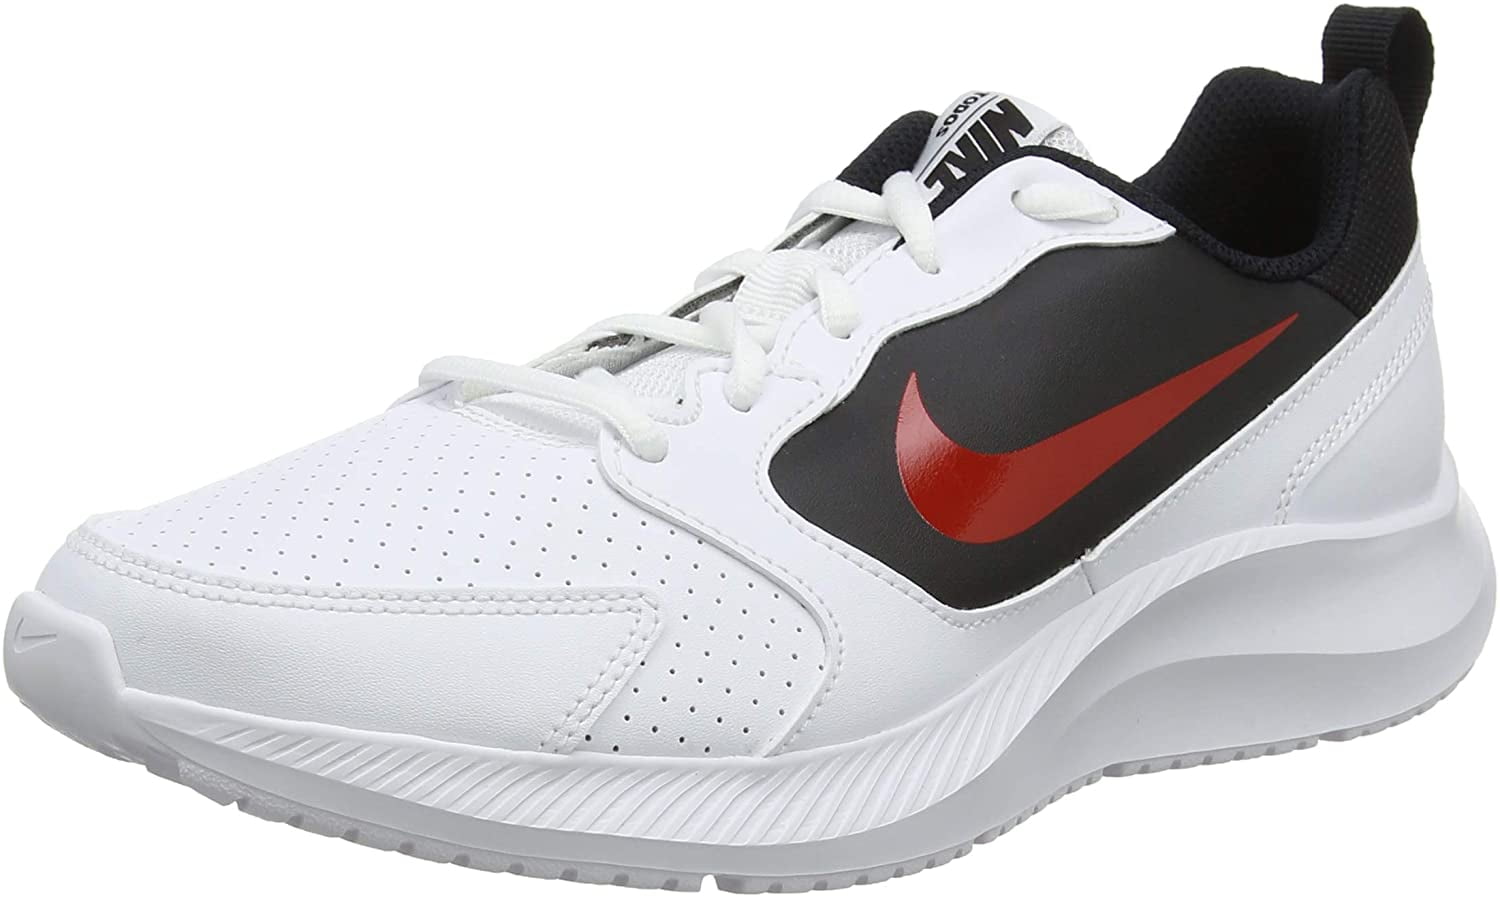 NIKE Todos Men/Adult shoe size 10 Athletic BQ3198-101 White/University Red-Black -